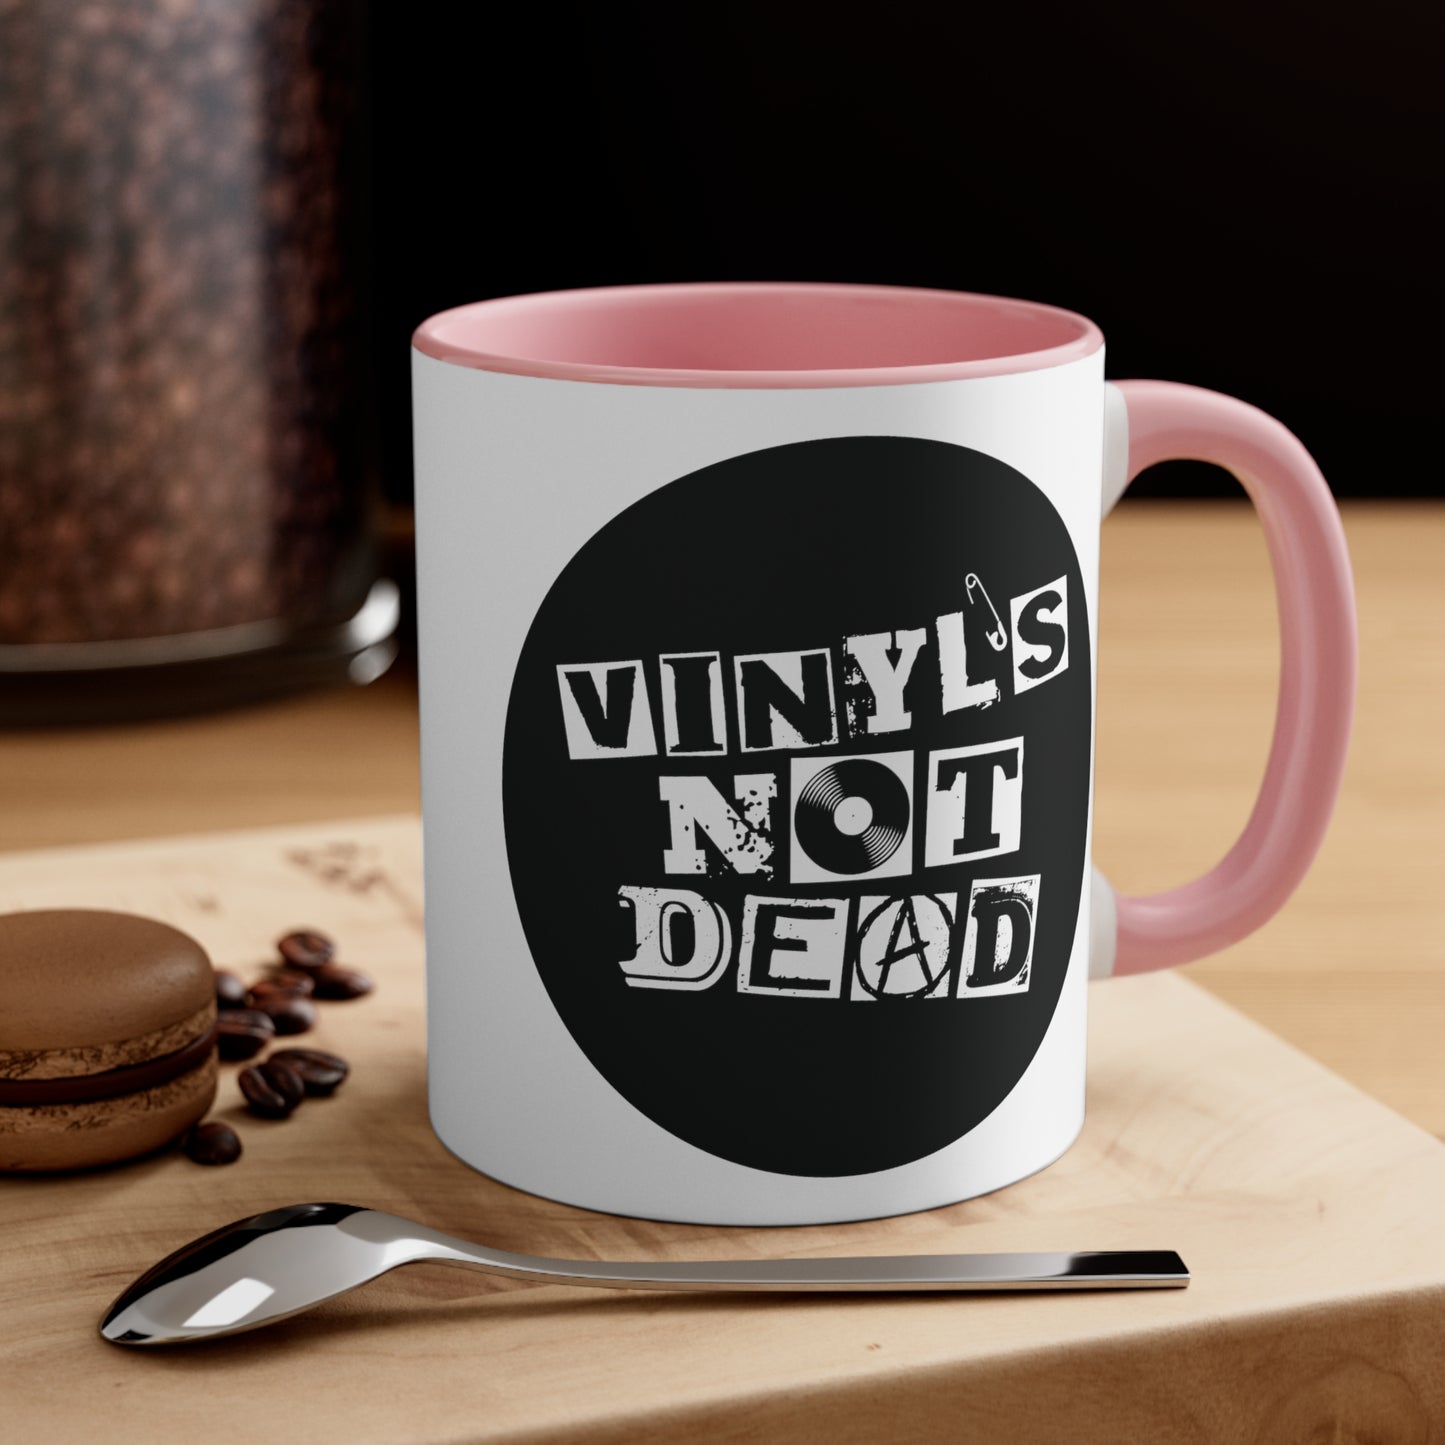 Vinyl Record Themed 11oz Accent Coffee Mug - Vinyl is Not Dead Pink